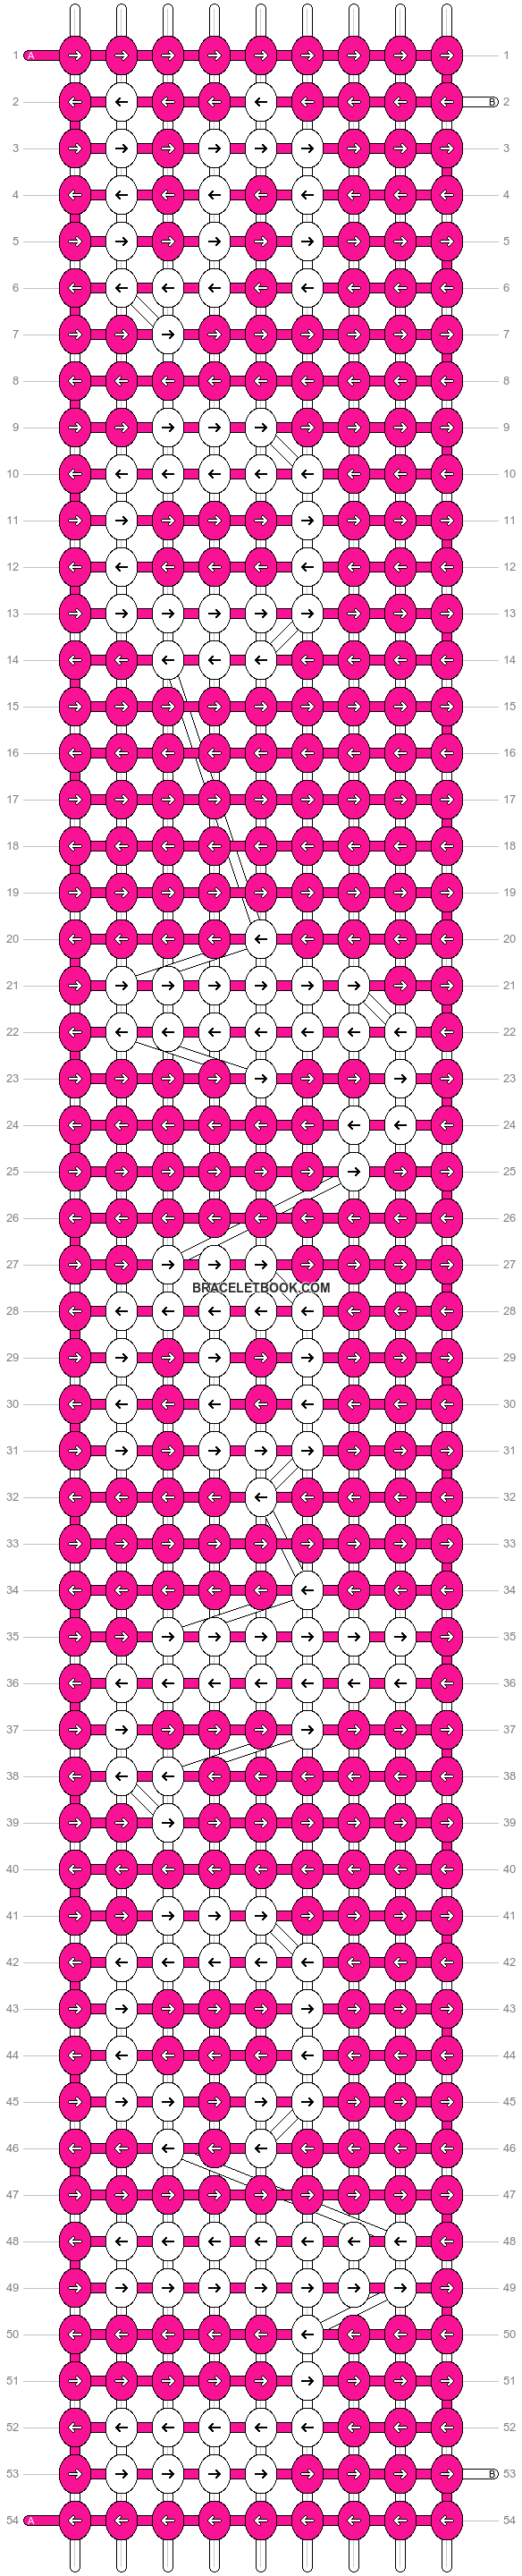 Alpha pattern #5211 variation #29360 pattern